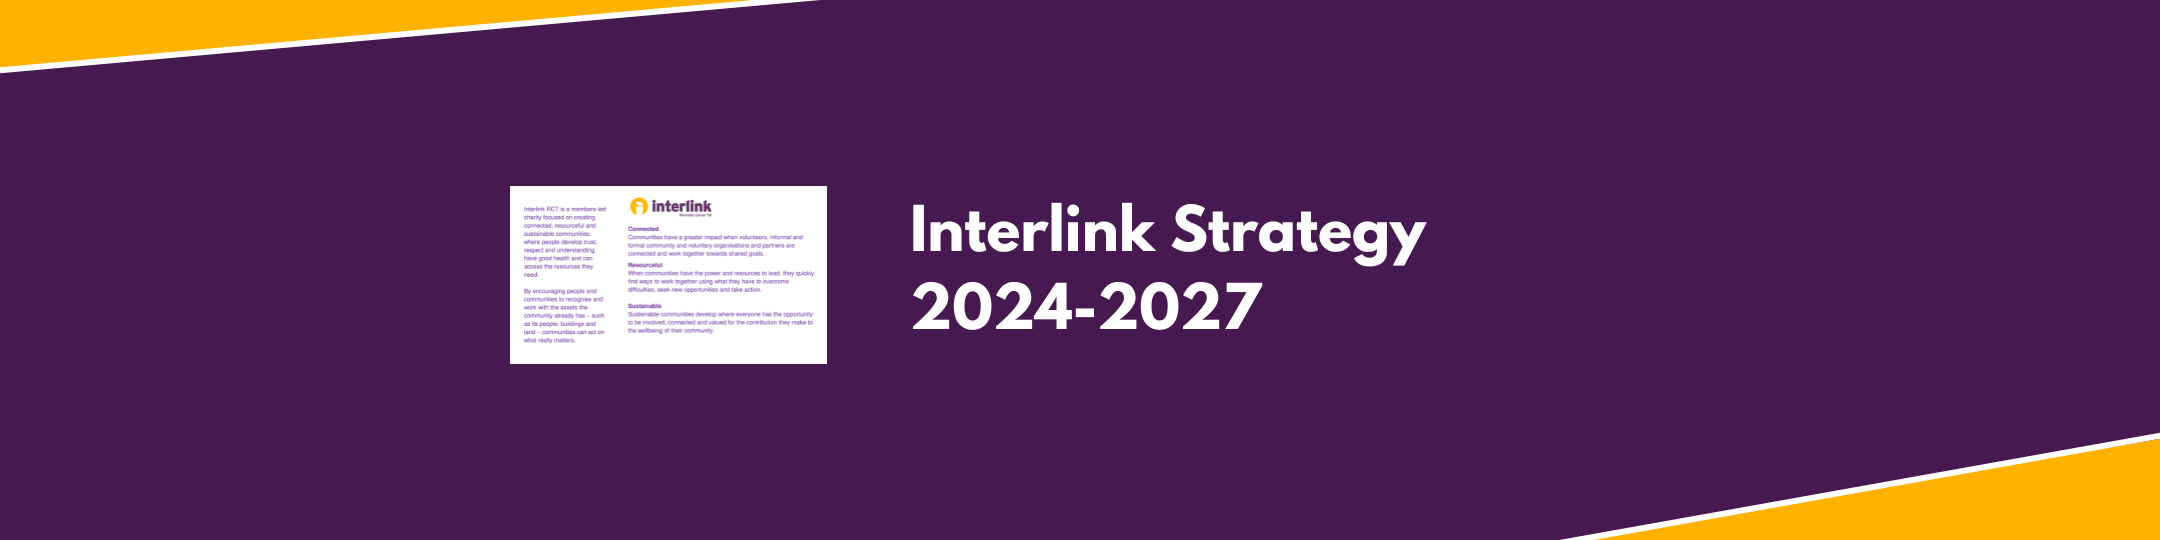 Interlink Strategy 2024-2027